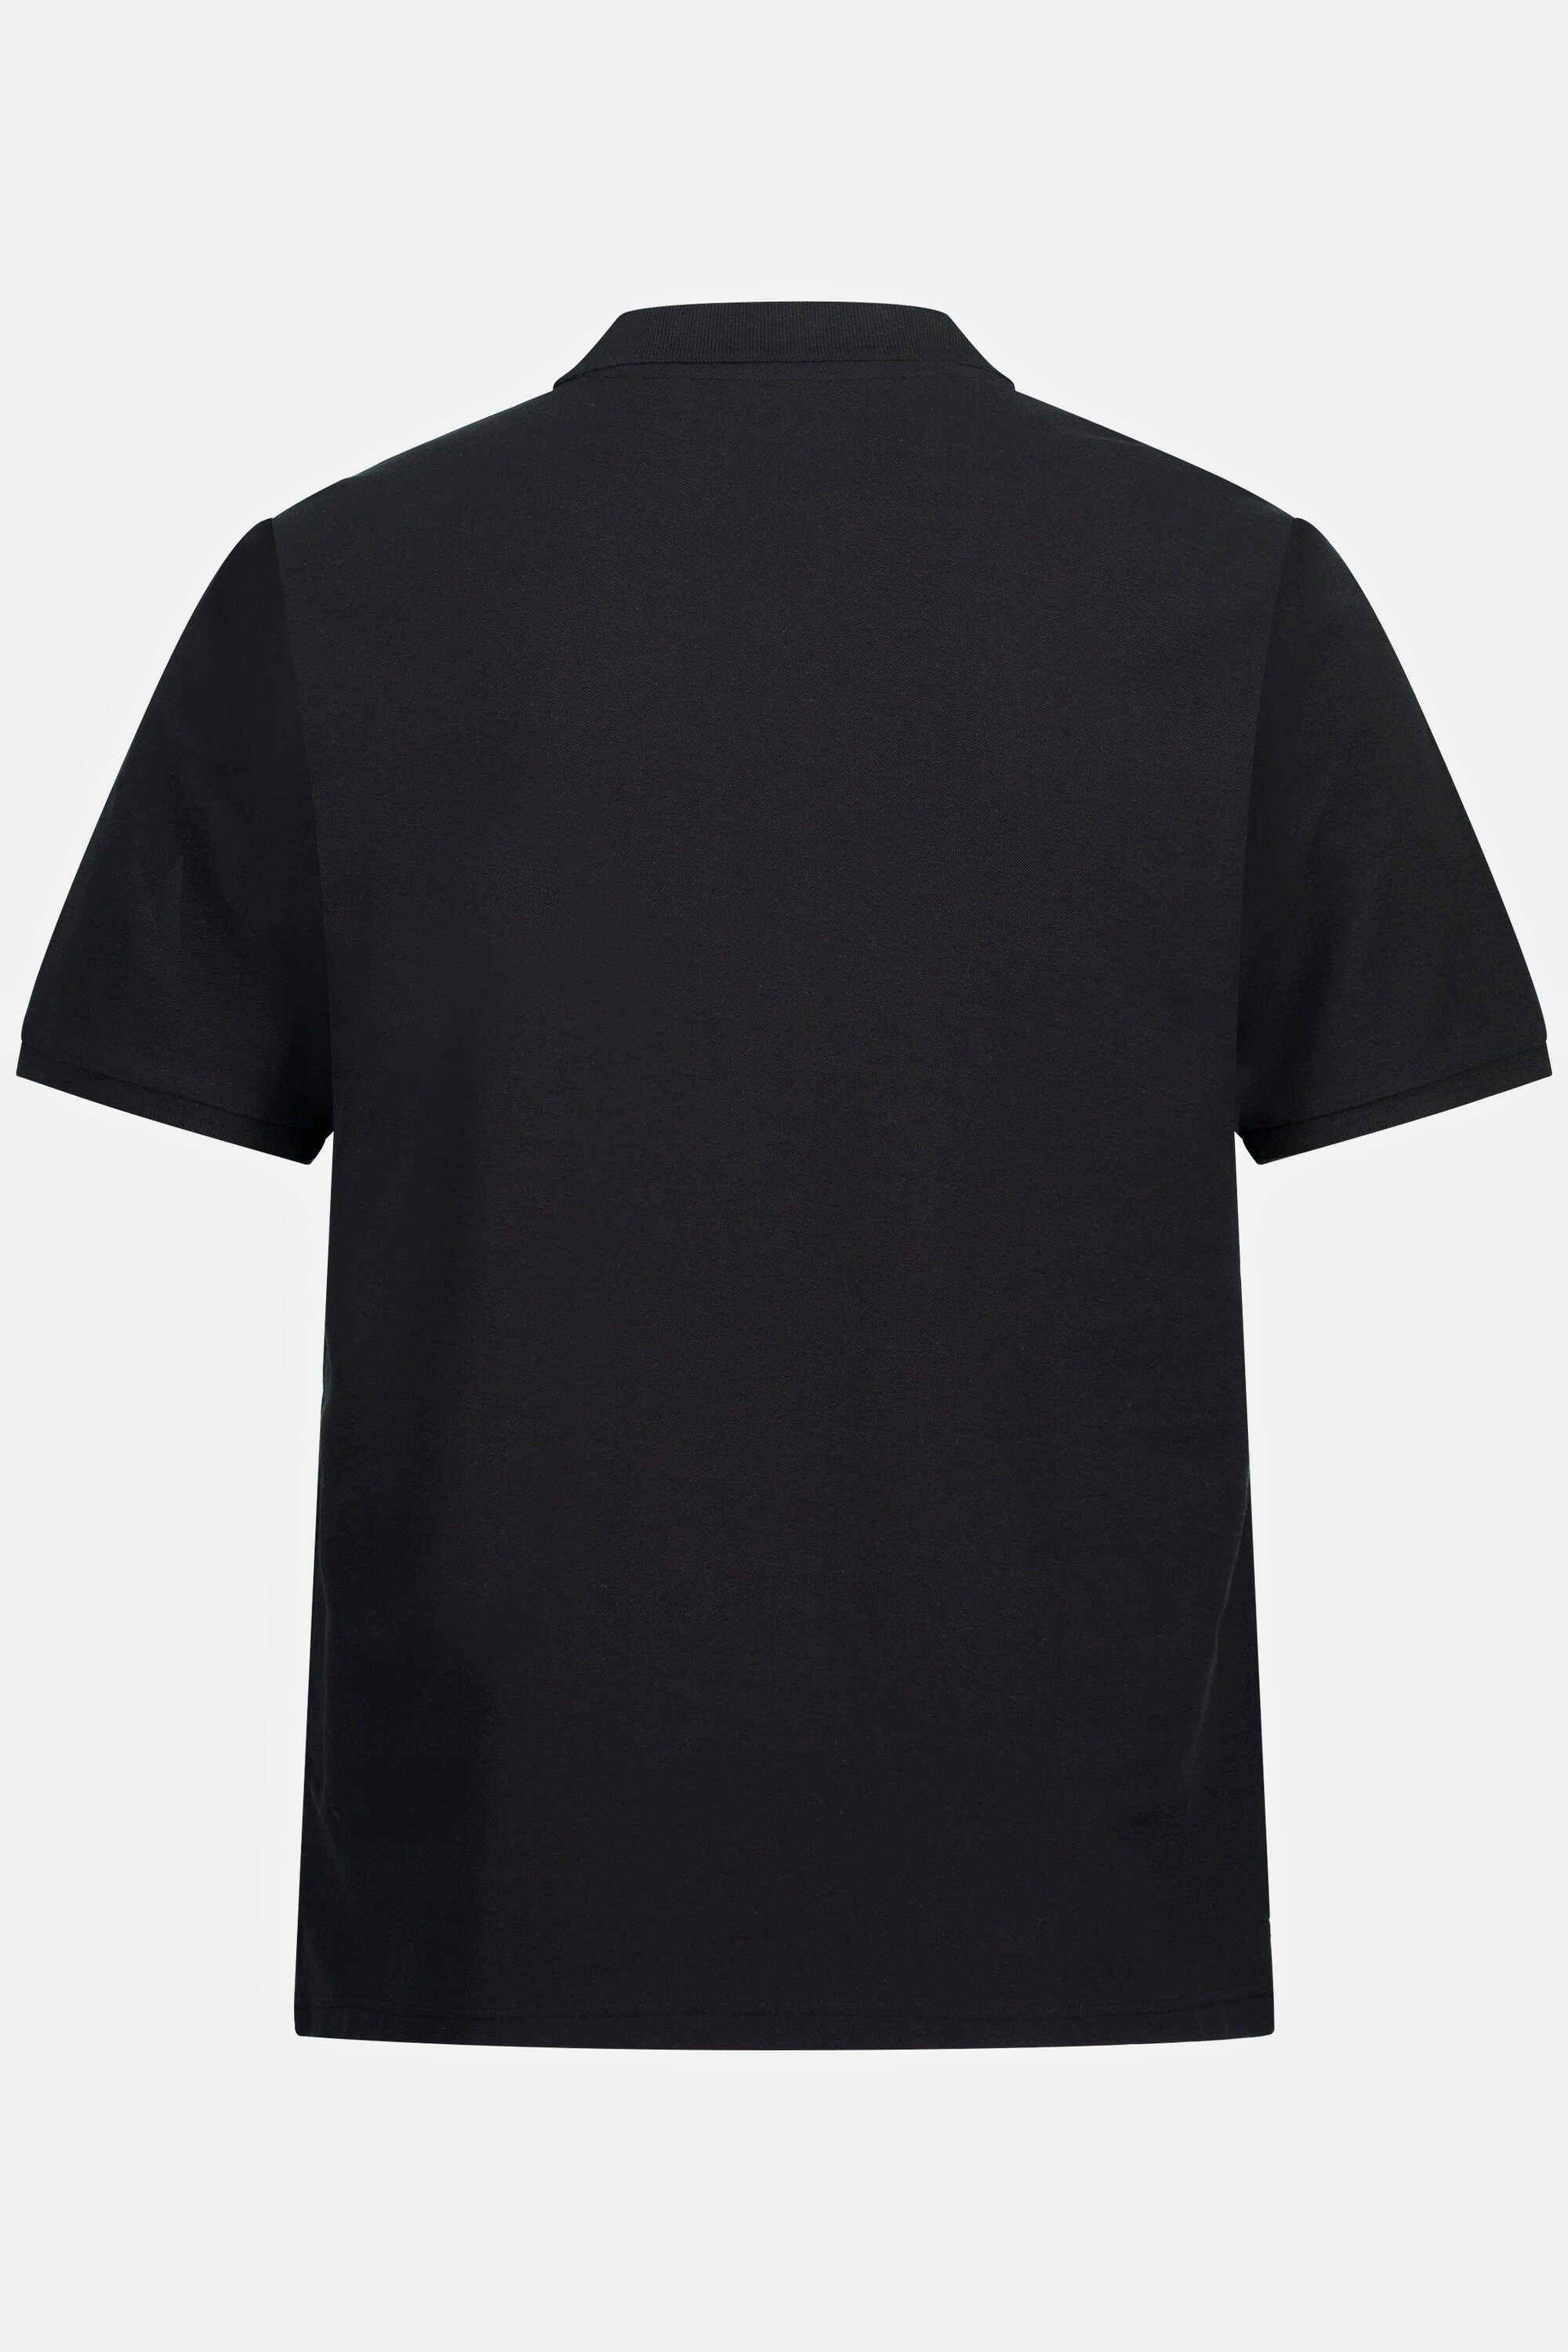 JP1880 Poloshirt Poloshirt Piqué schwarz Polokragen Knöpfe Halbarm ohne